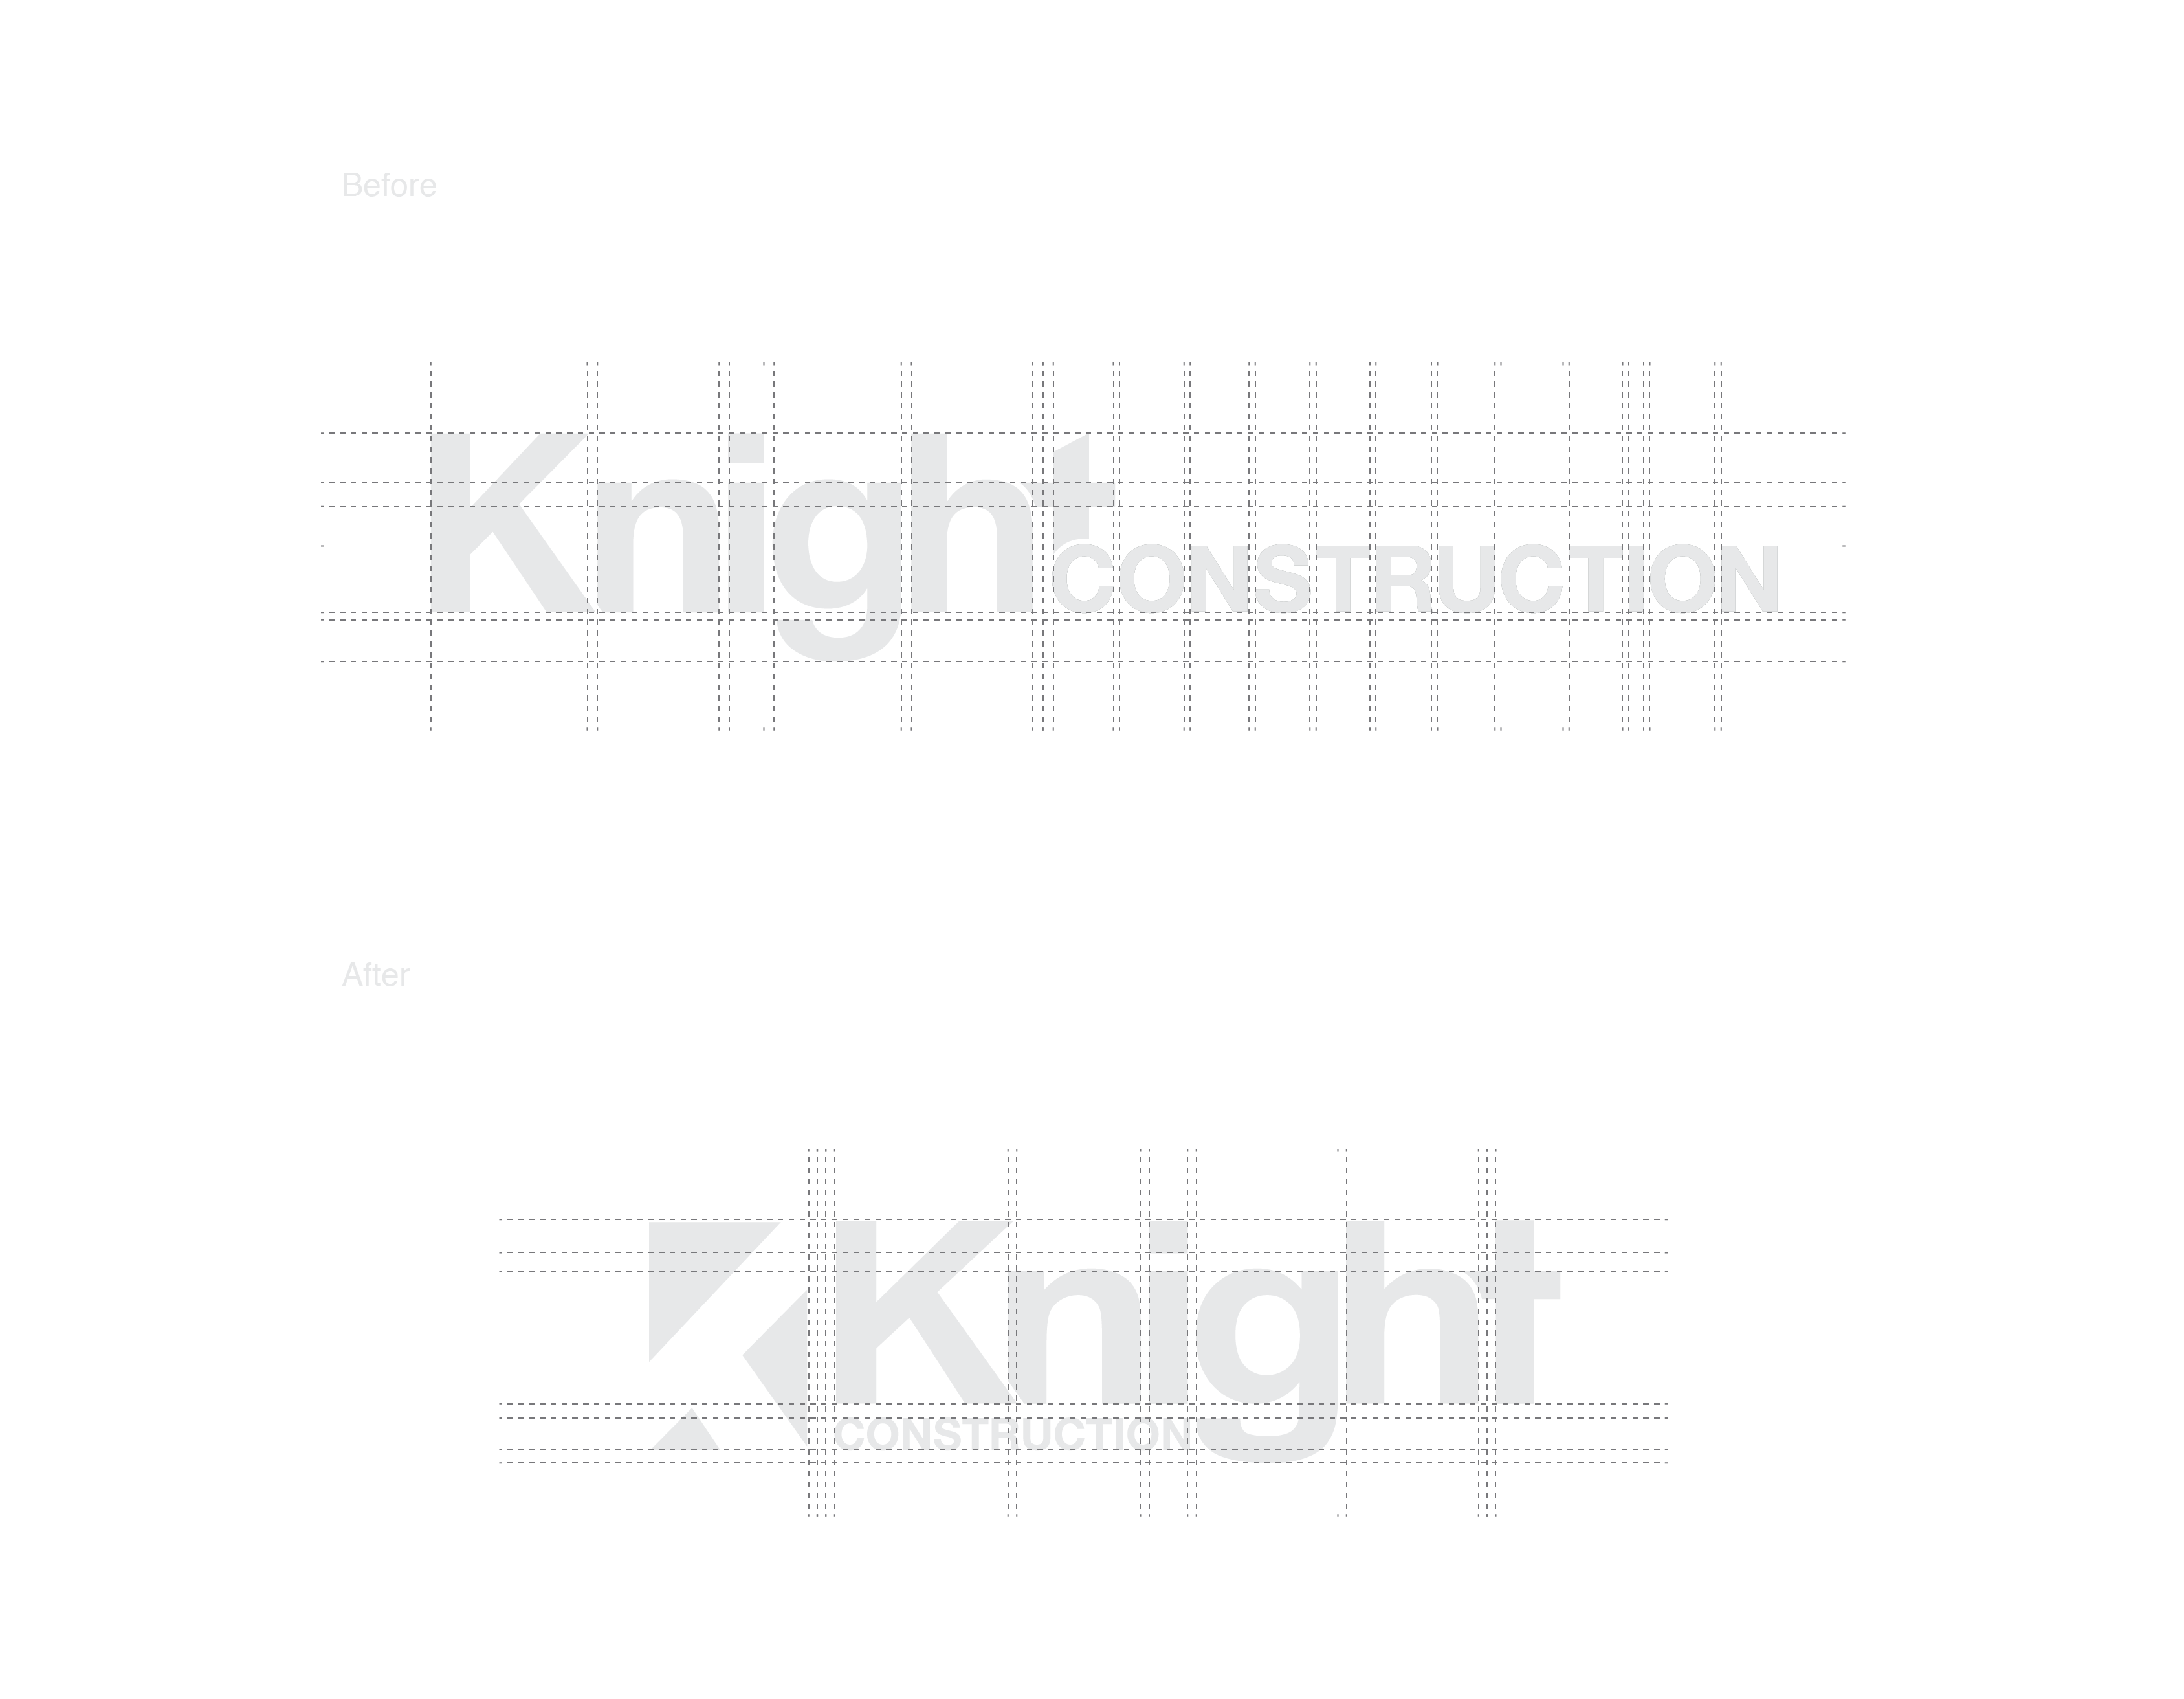 Knight-MockupLayout - Horizontal-02